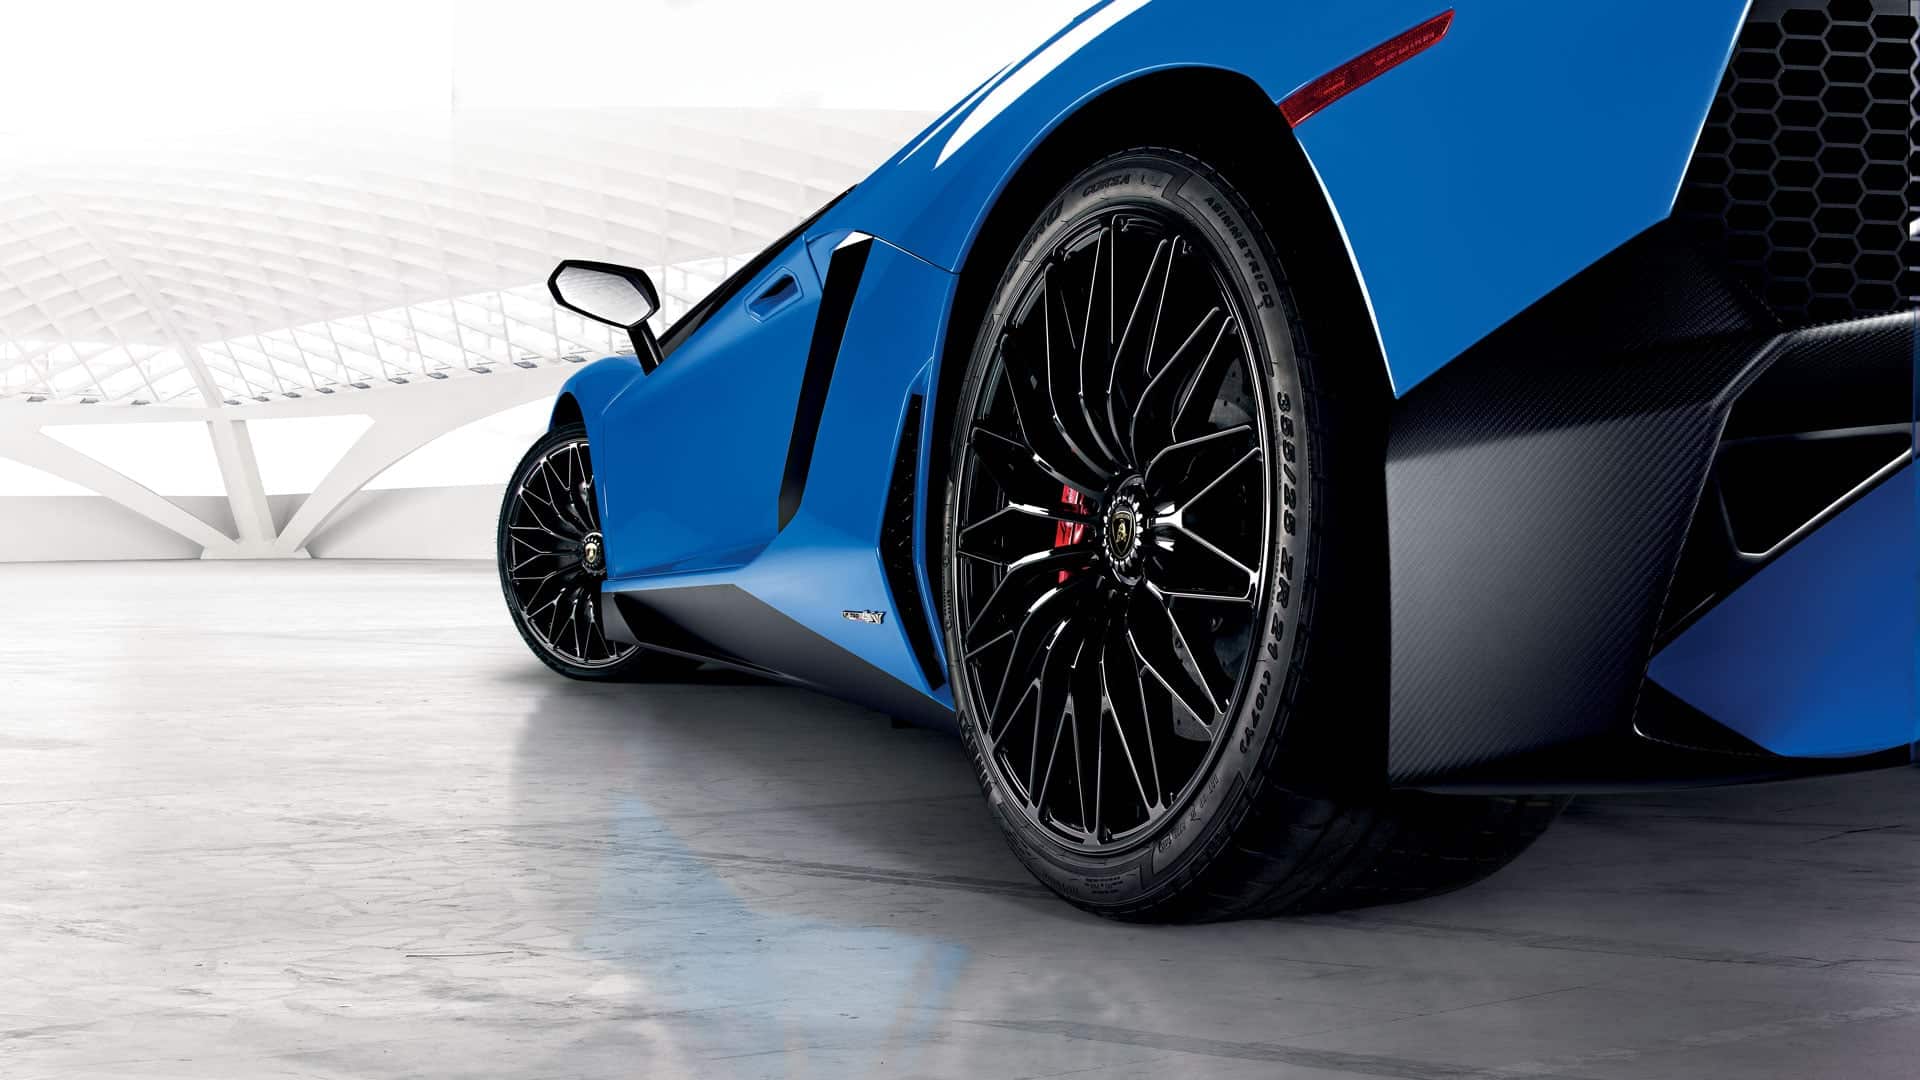 Lamborghini Aventador SV Roadster Car on Rent in Dubai